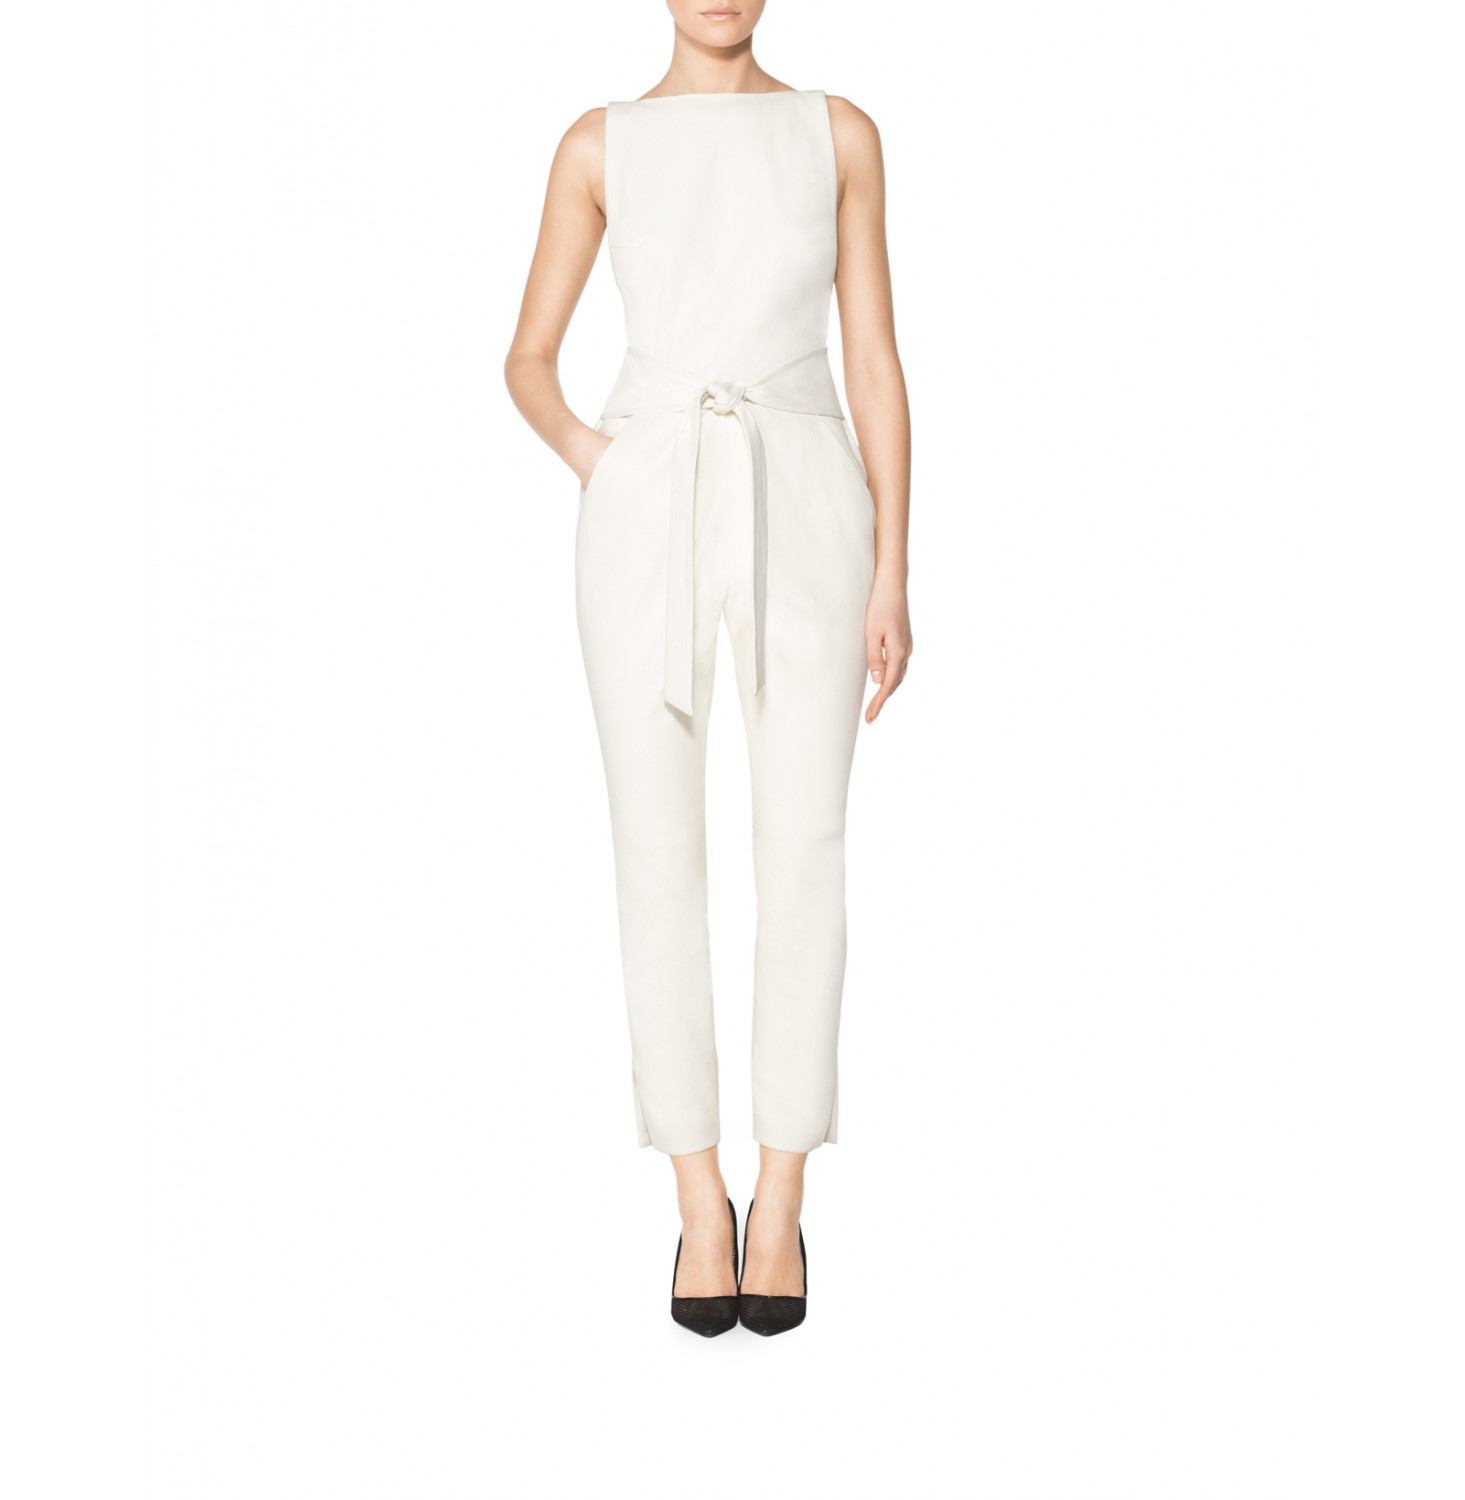 Tamara Mellon Sleeveless Leather Jumpsuit in White (Cream) | Lyst